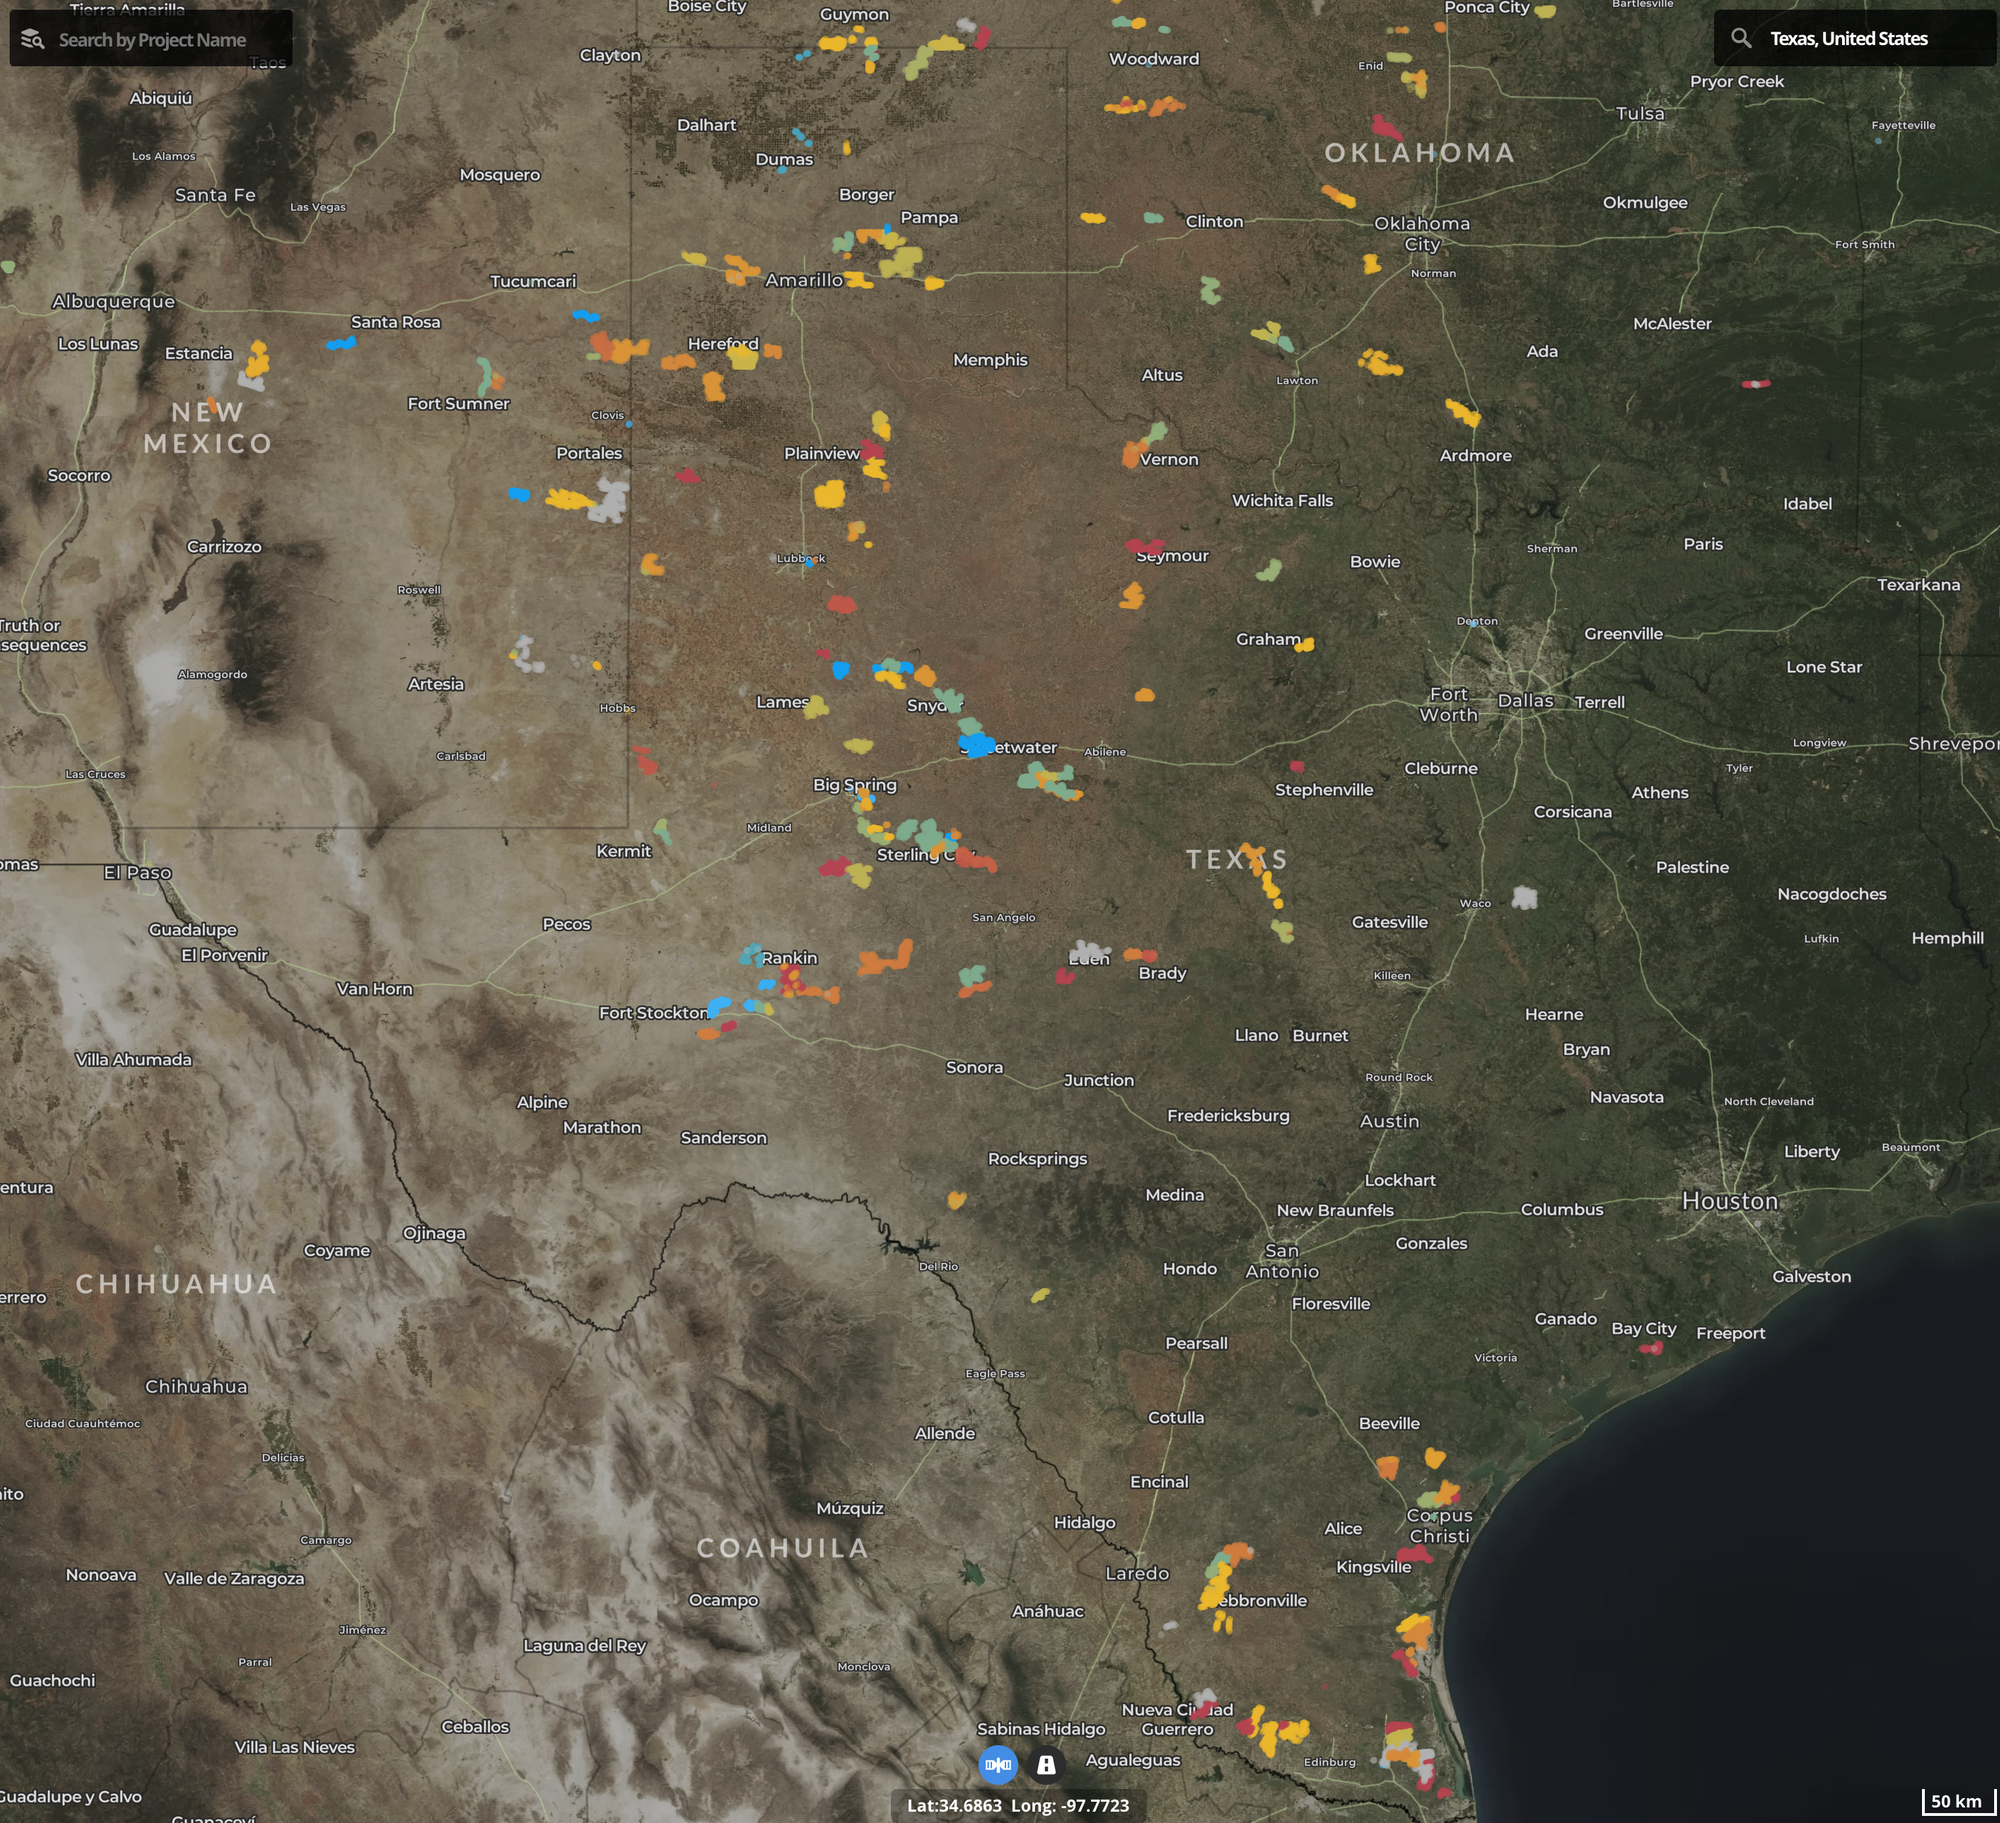 Texas Wind Farm locations: US Wind Turbine Data Base